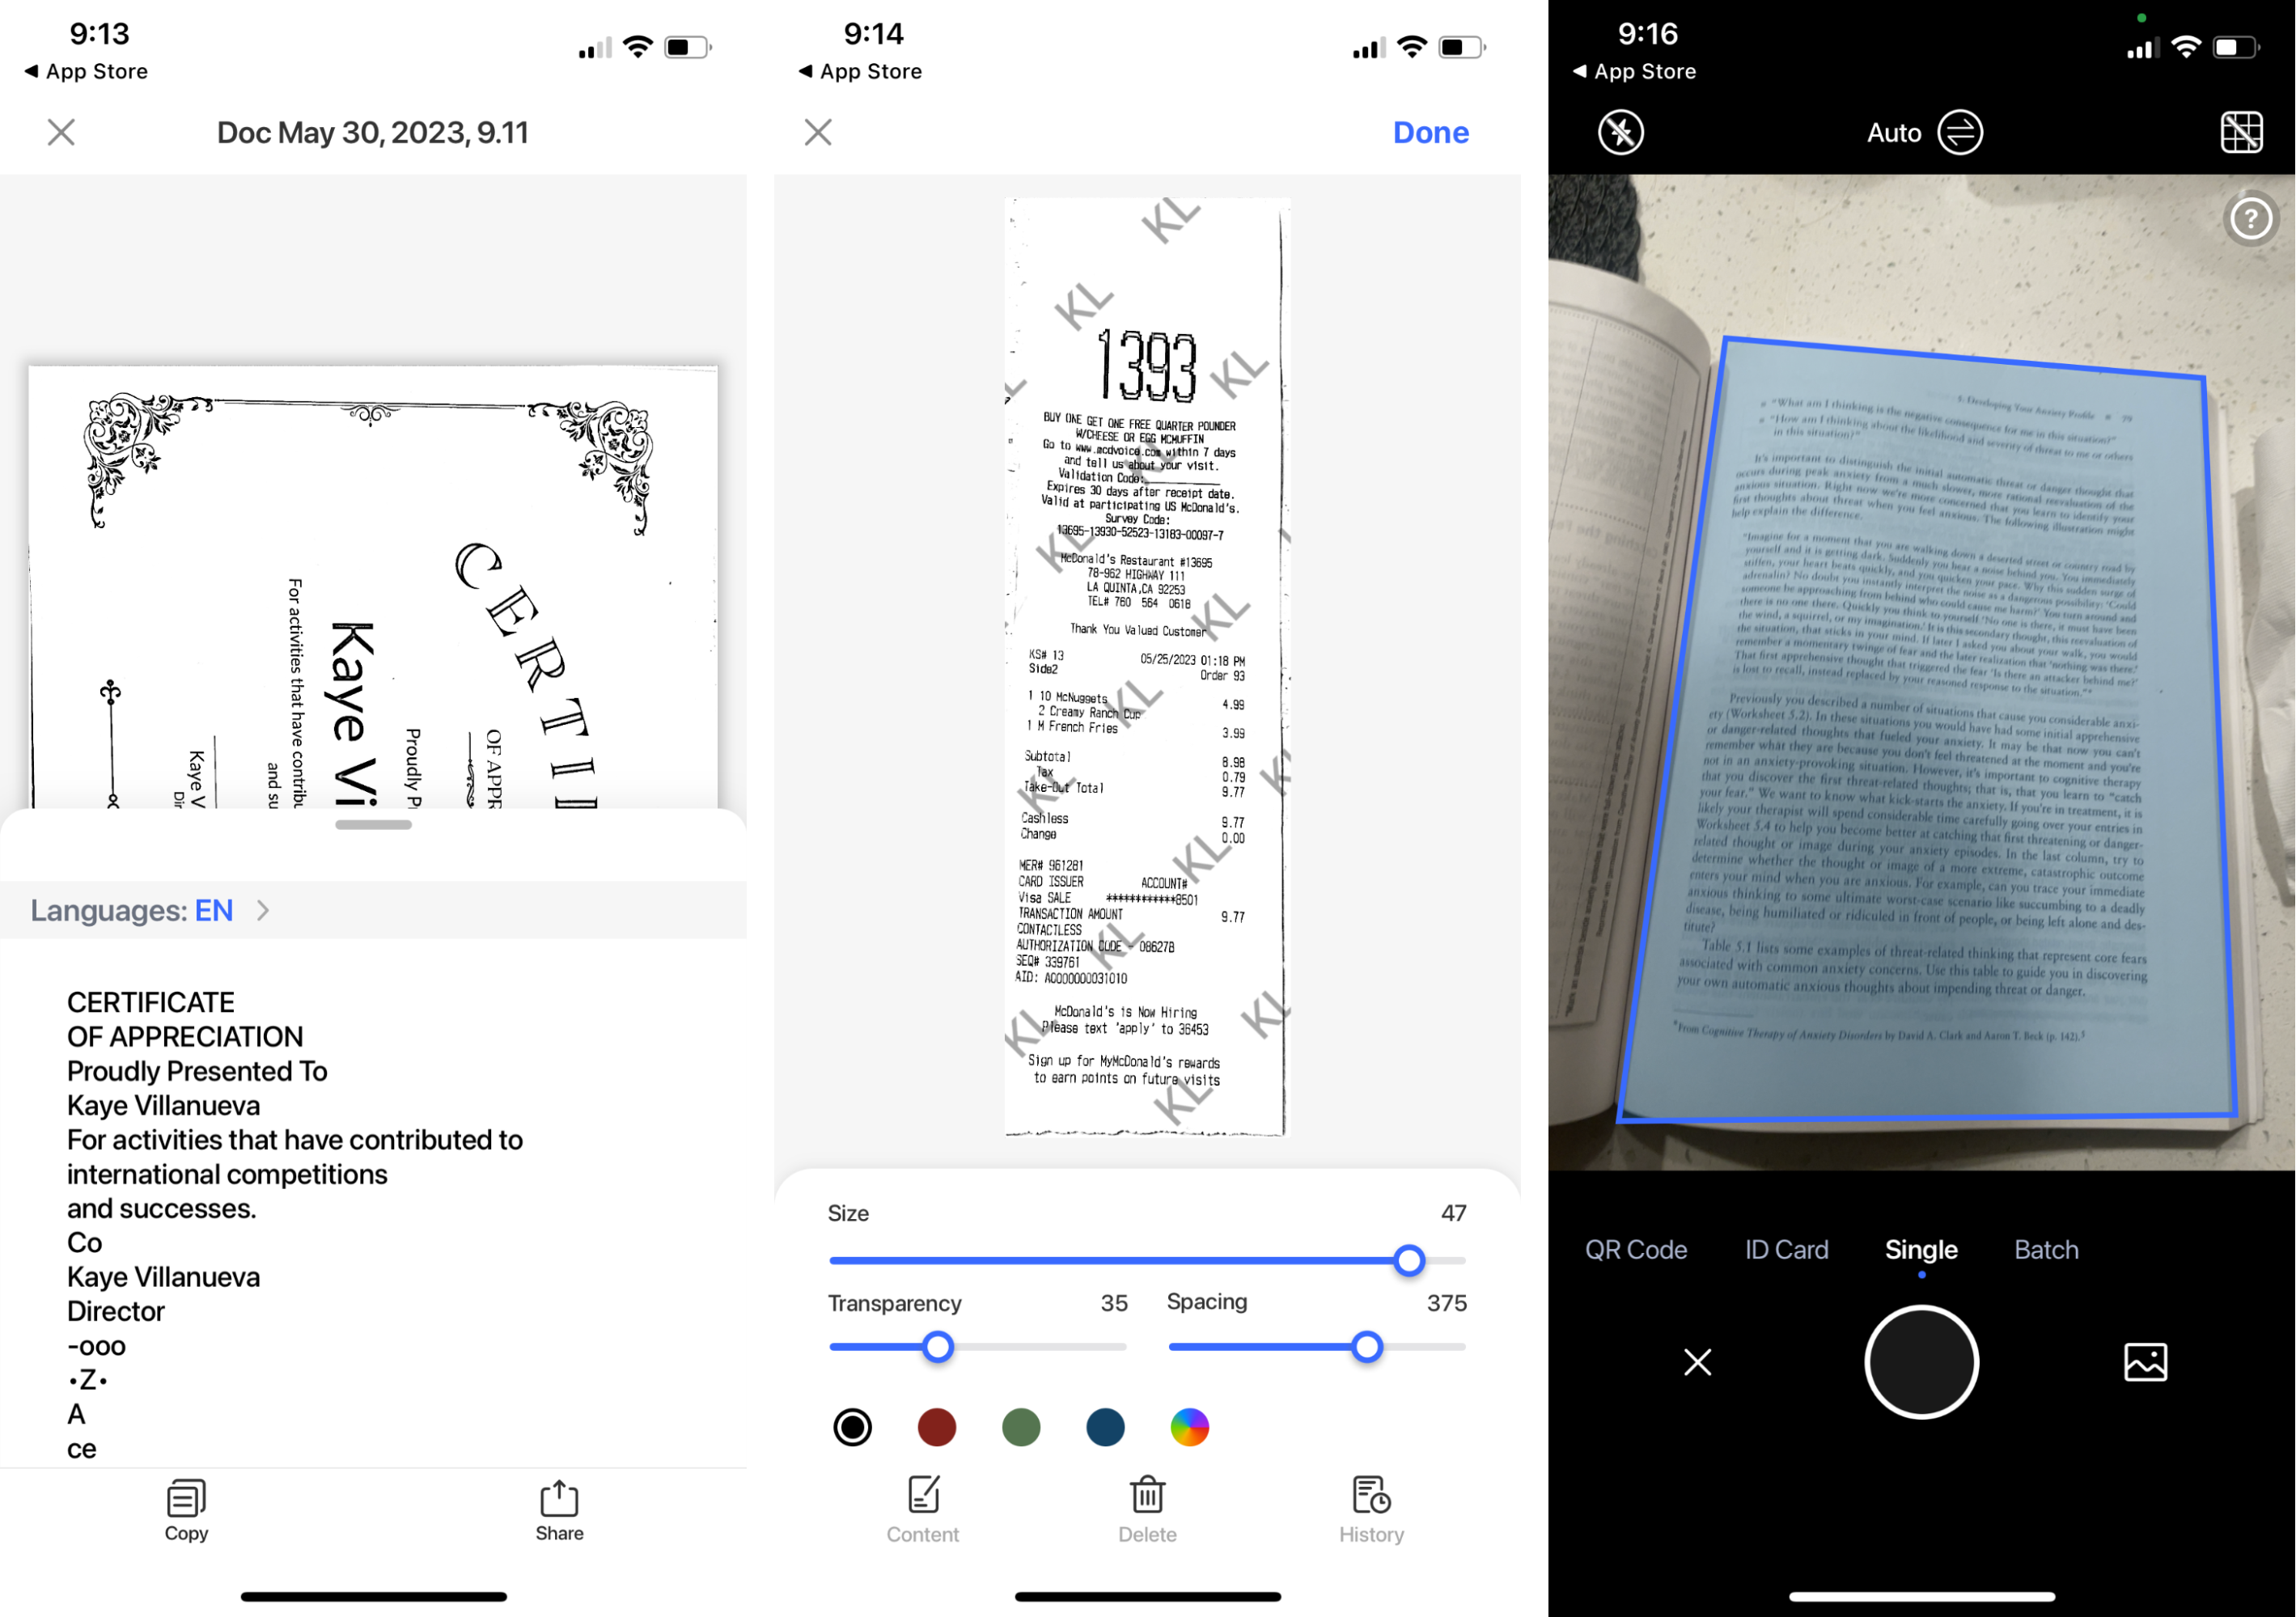 PDF Scanner - Document Scanner - Apps on Google Play